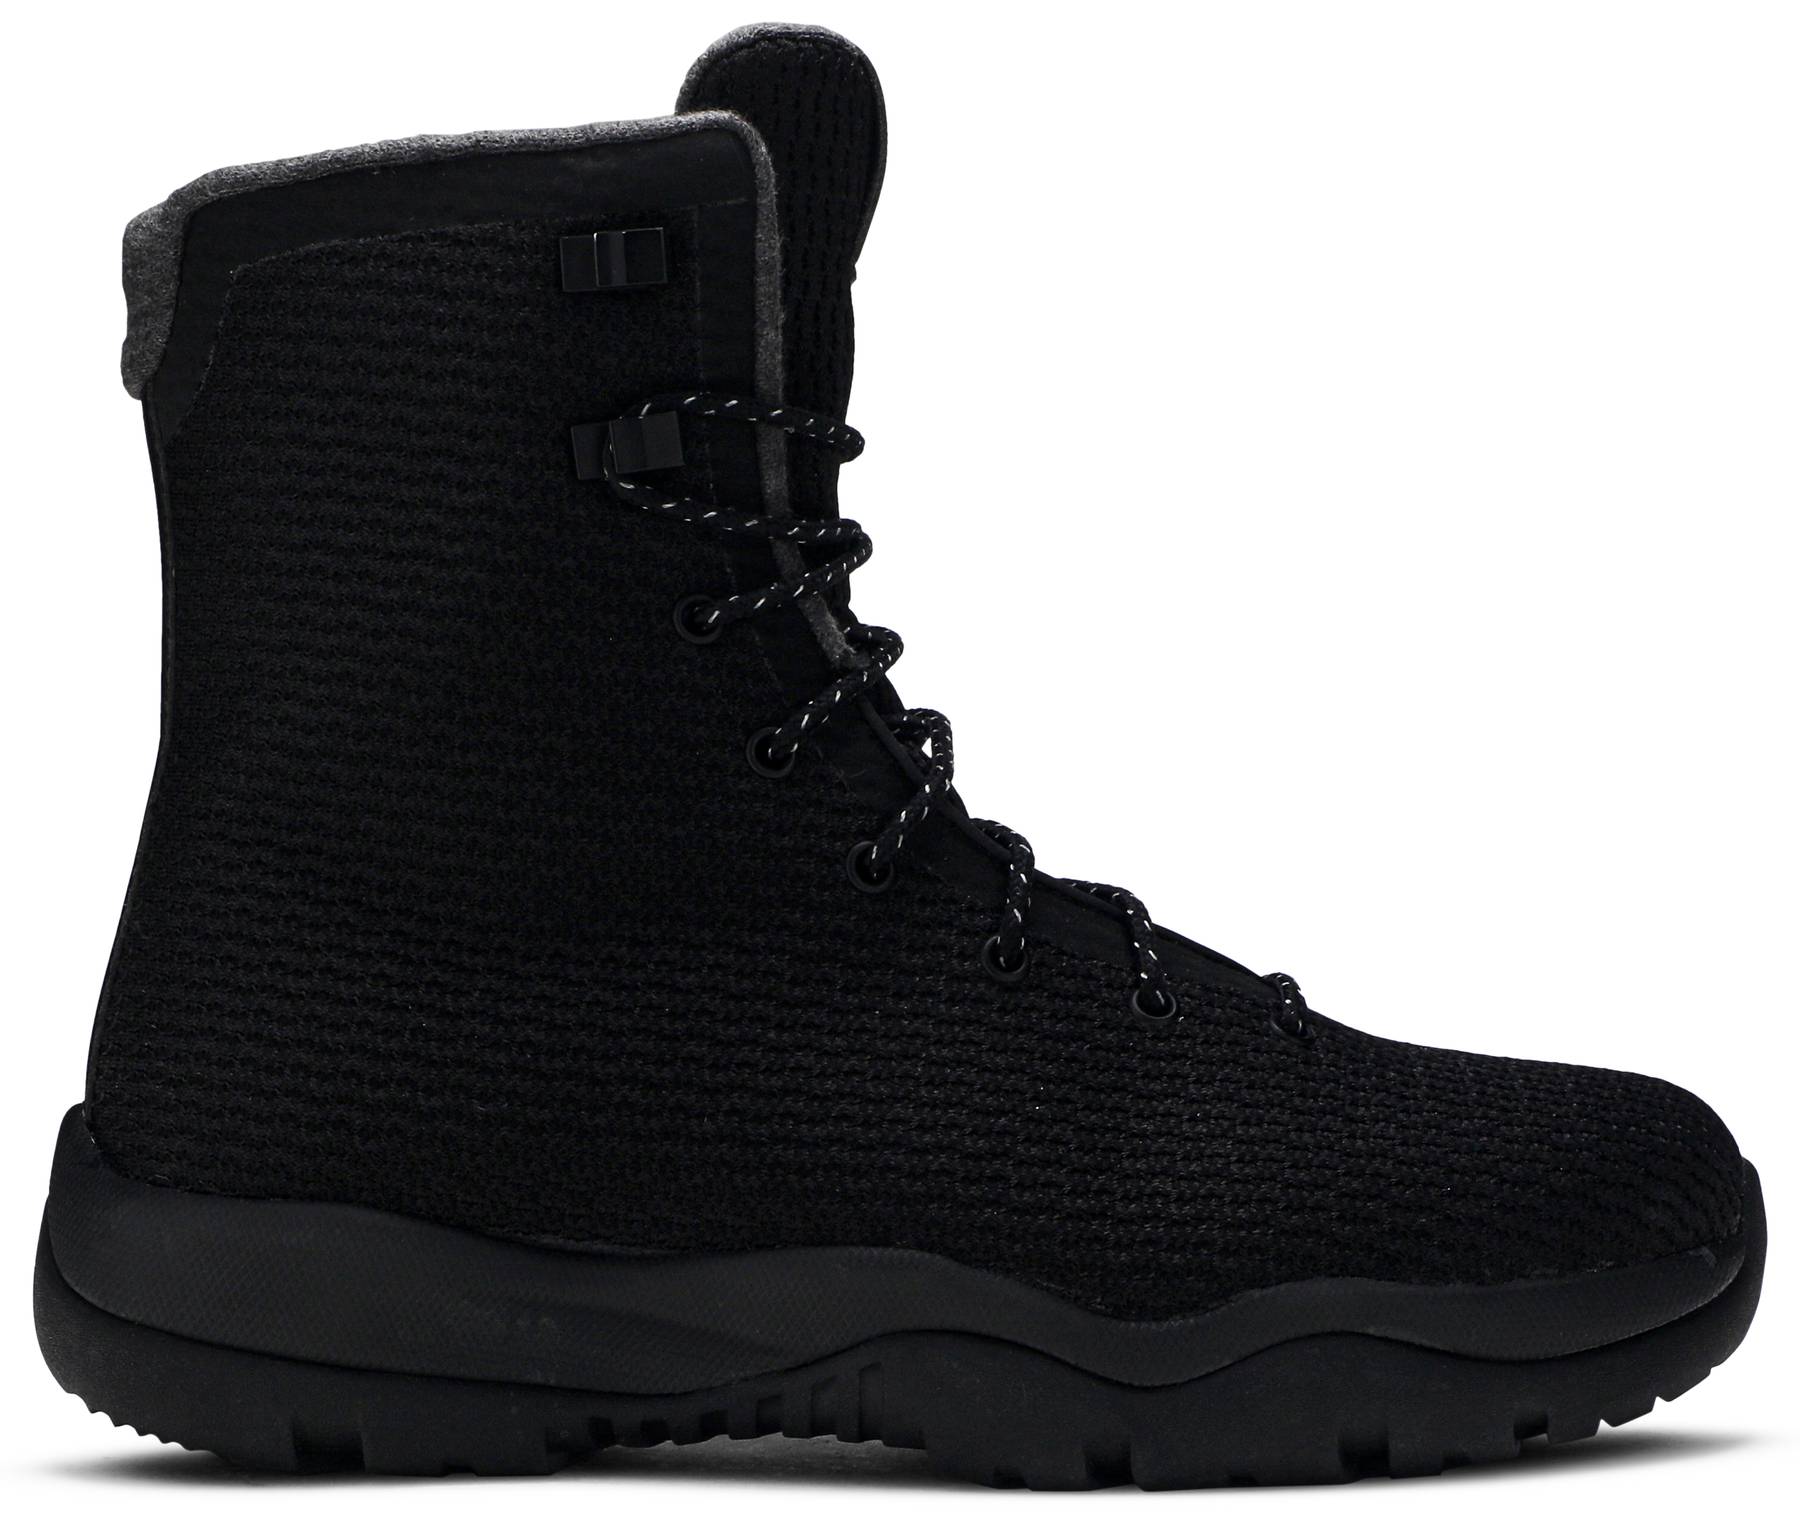 Jordan Future Boot 'Black Dark Grey' - Air Jordan - 854554 002 | GOAT